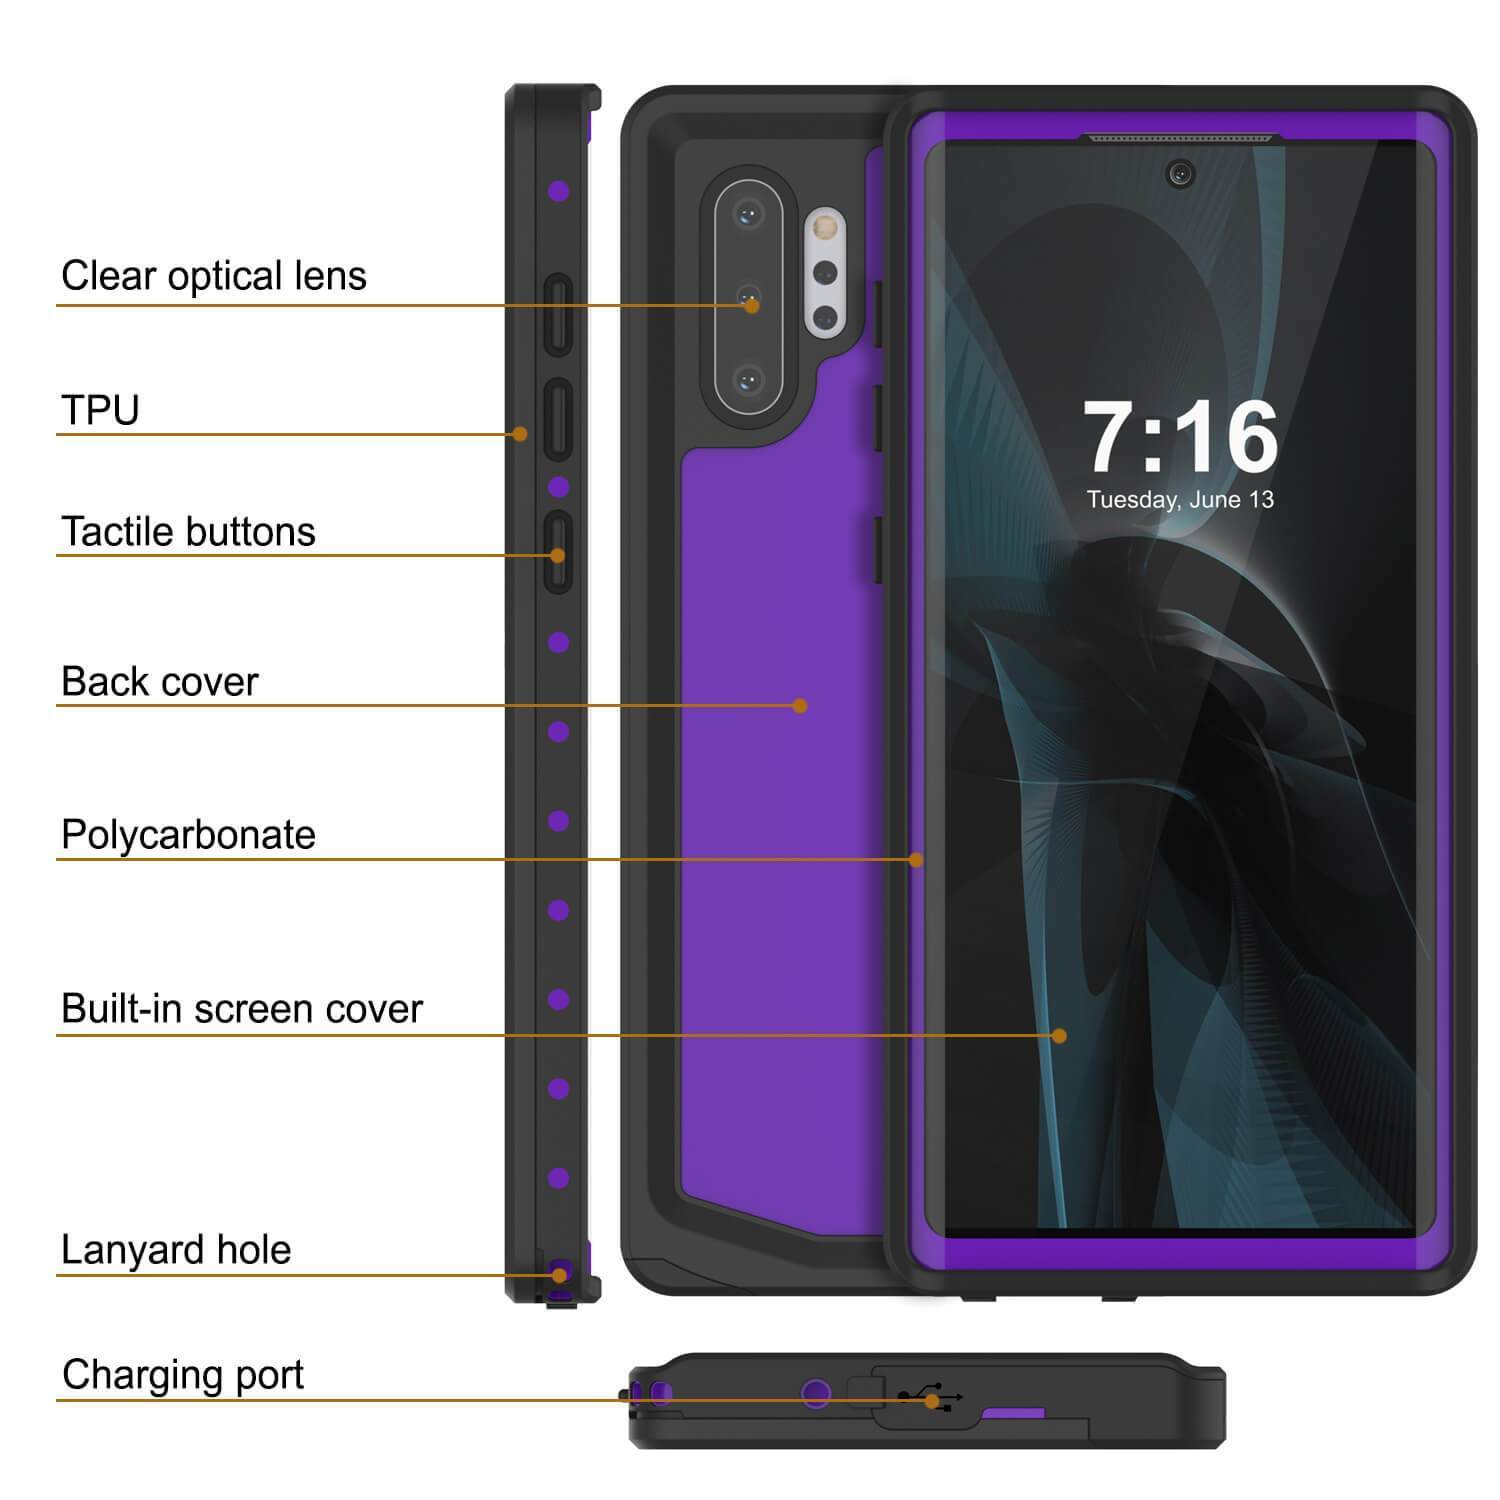 Galaxy Note 10+ Plus Waterproof Case, Punkcase Studstar Purple Series Thin Armor Cover